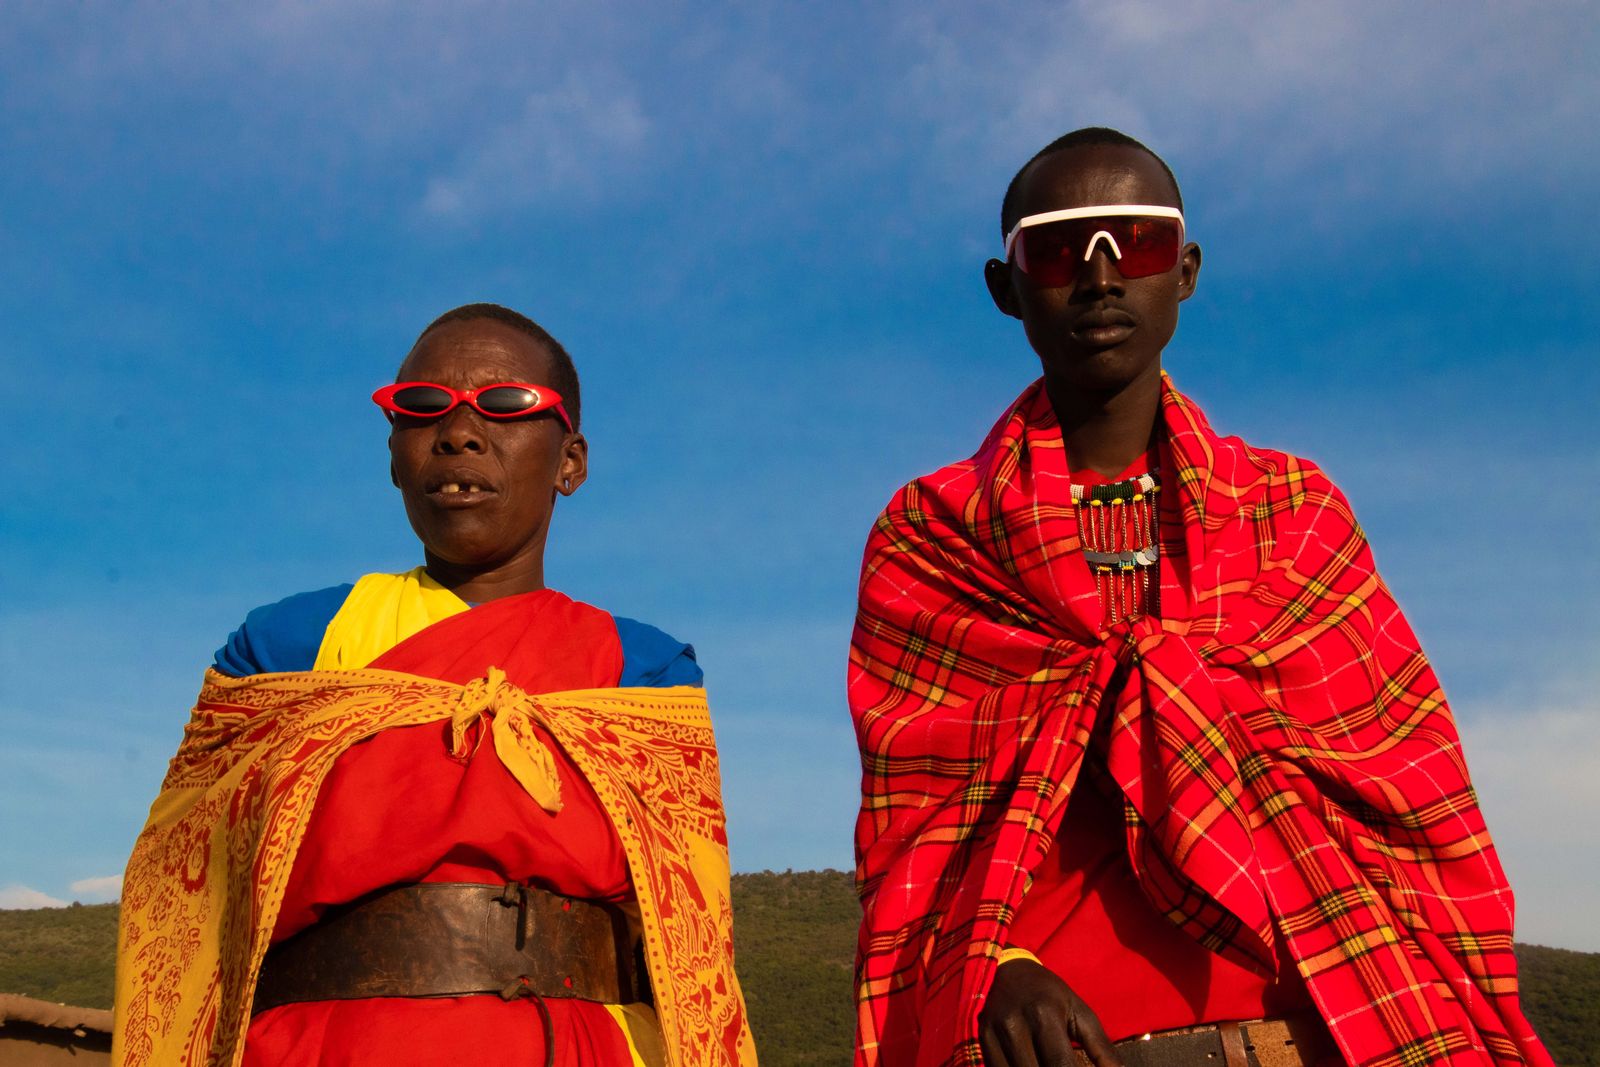 © Nwando Ebeledike - This photo was taken in Maasai Mara, Kenya and is a photo of two Maasai's in the same community